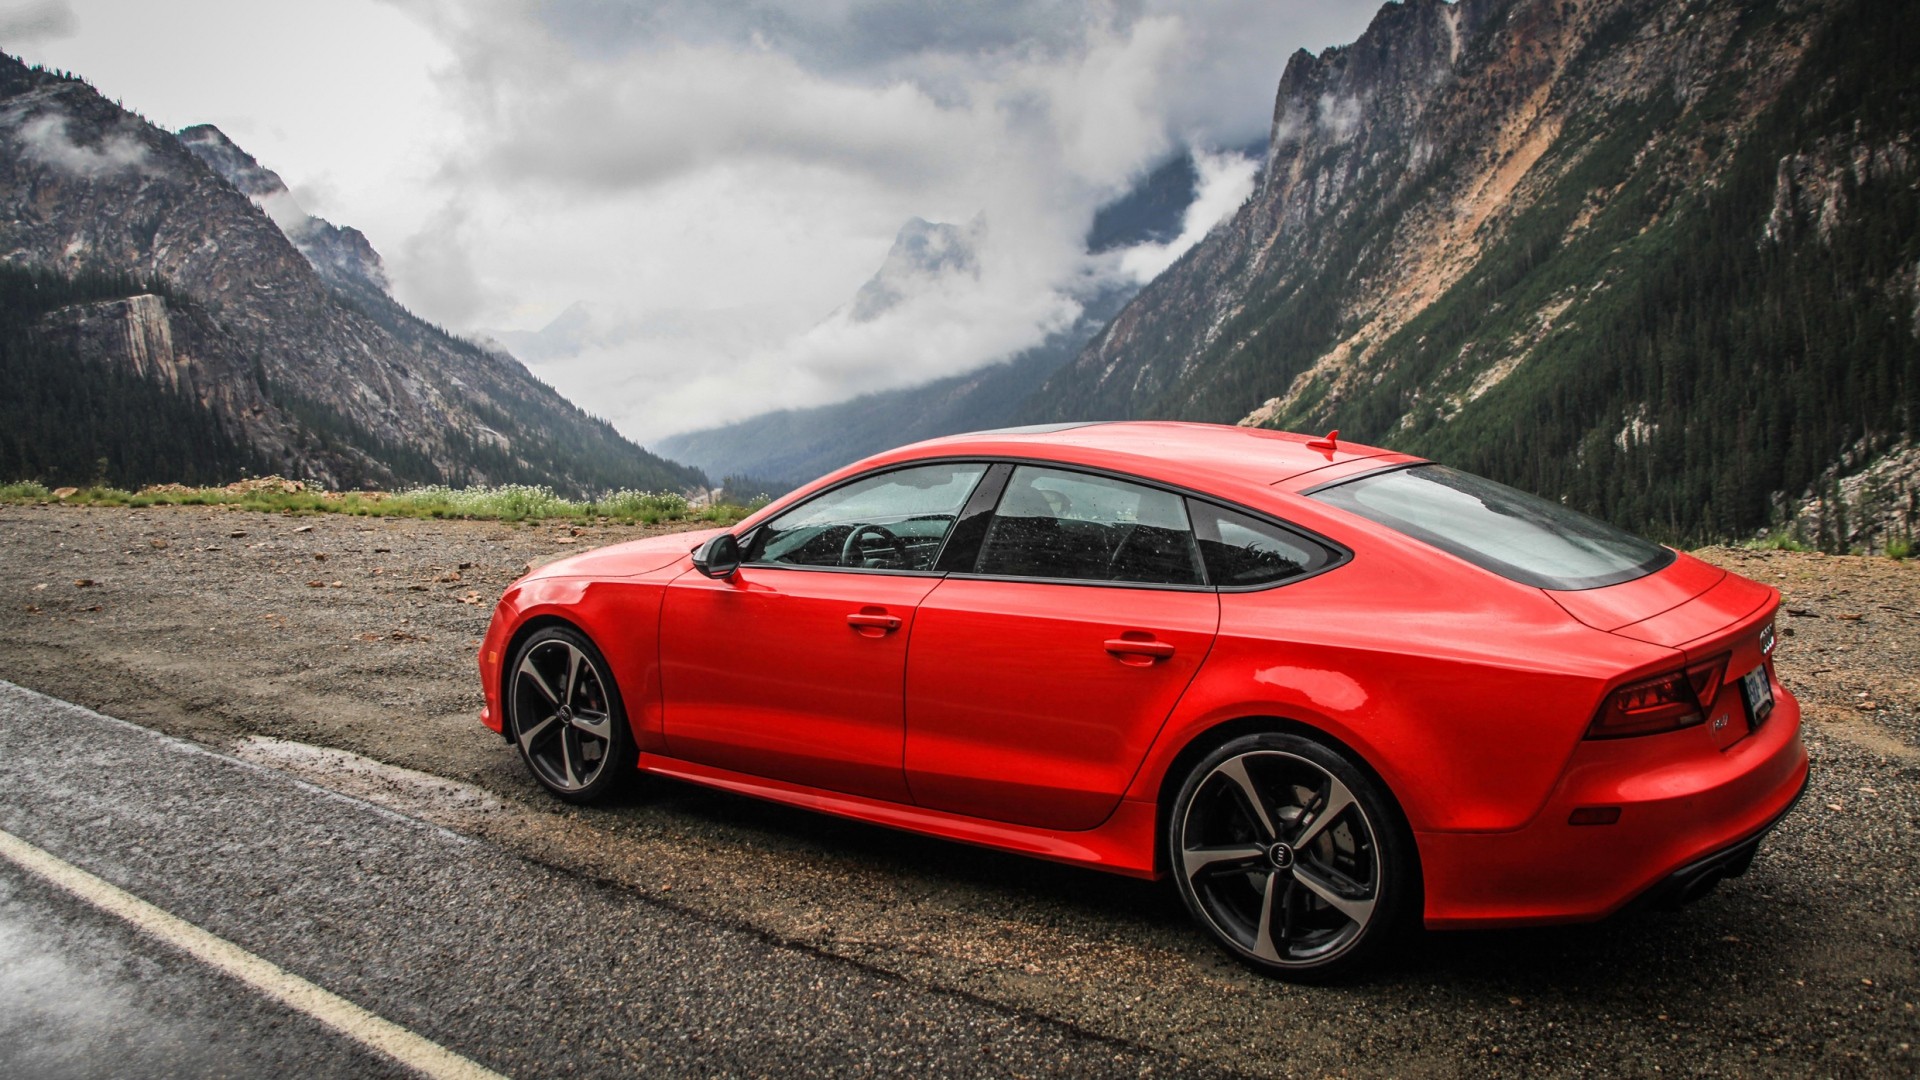 Audi RS7, Audi, Audizone, Red cars, Mountains, Vehicle, Car Wallpaper